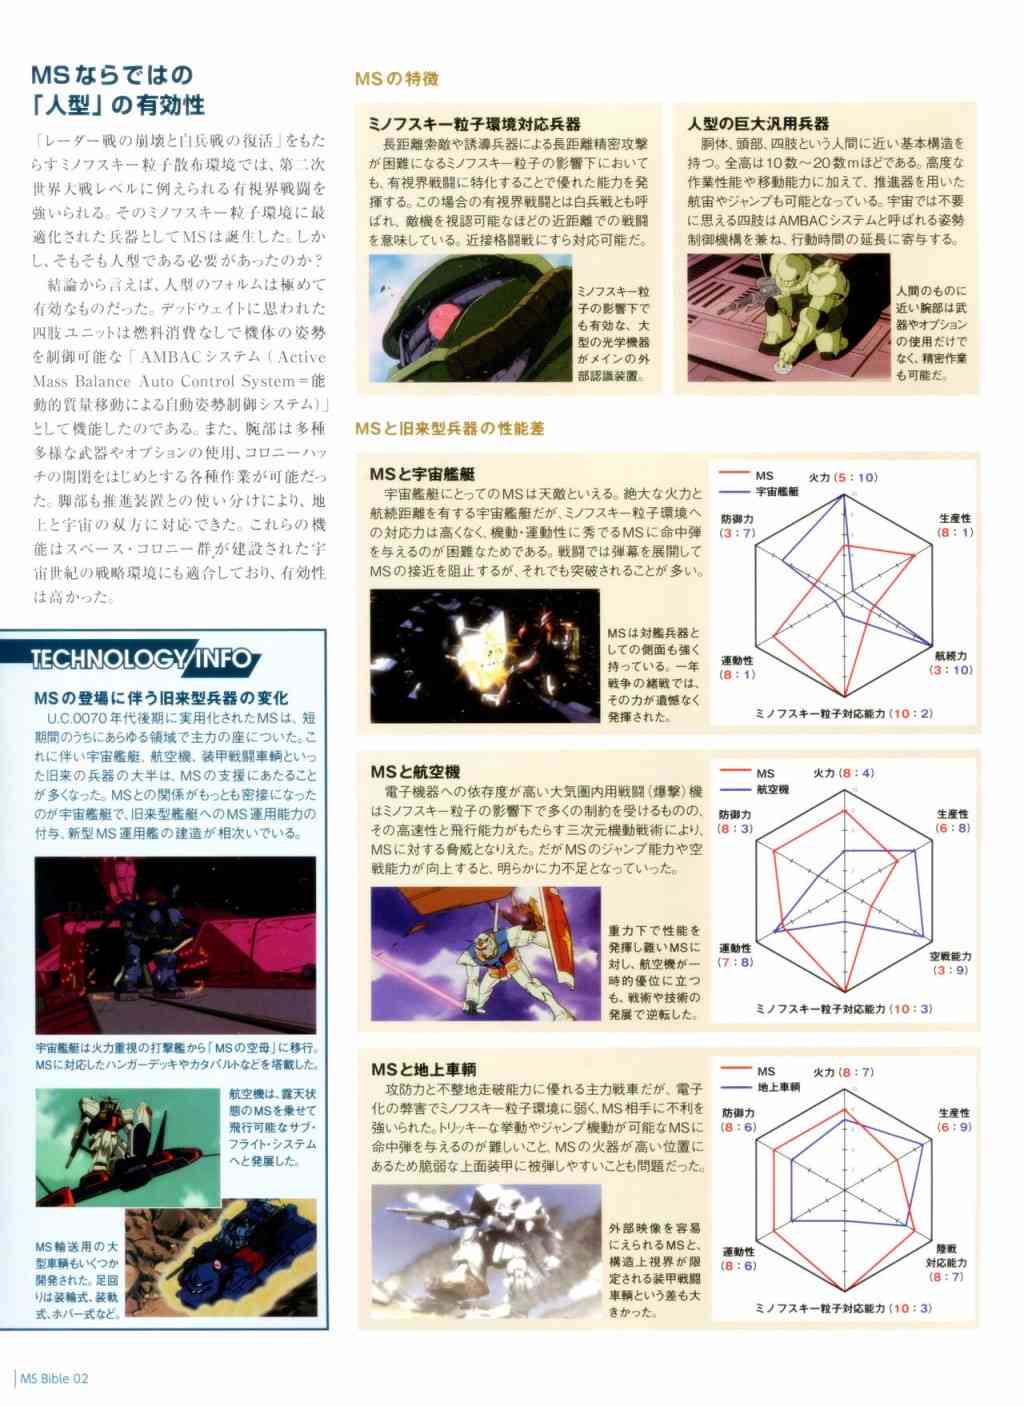 Gundam Mobile Suit Bible - 2卷 - 1